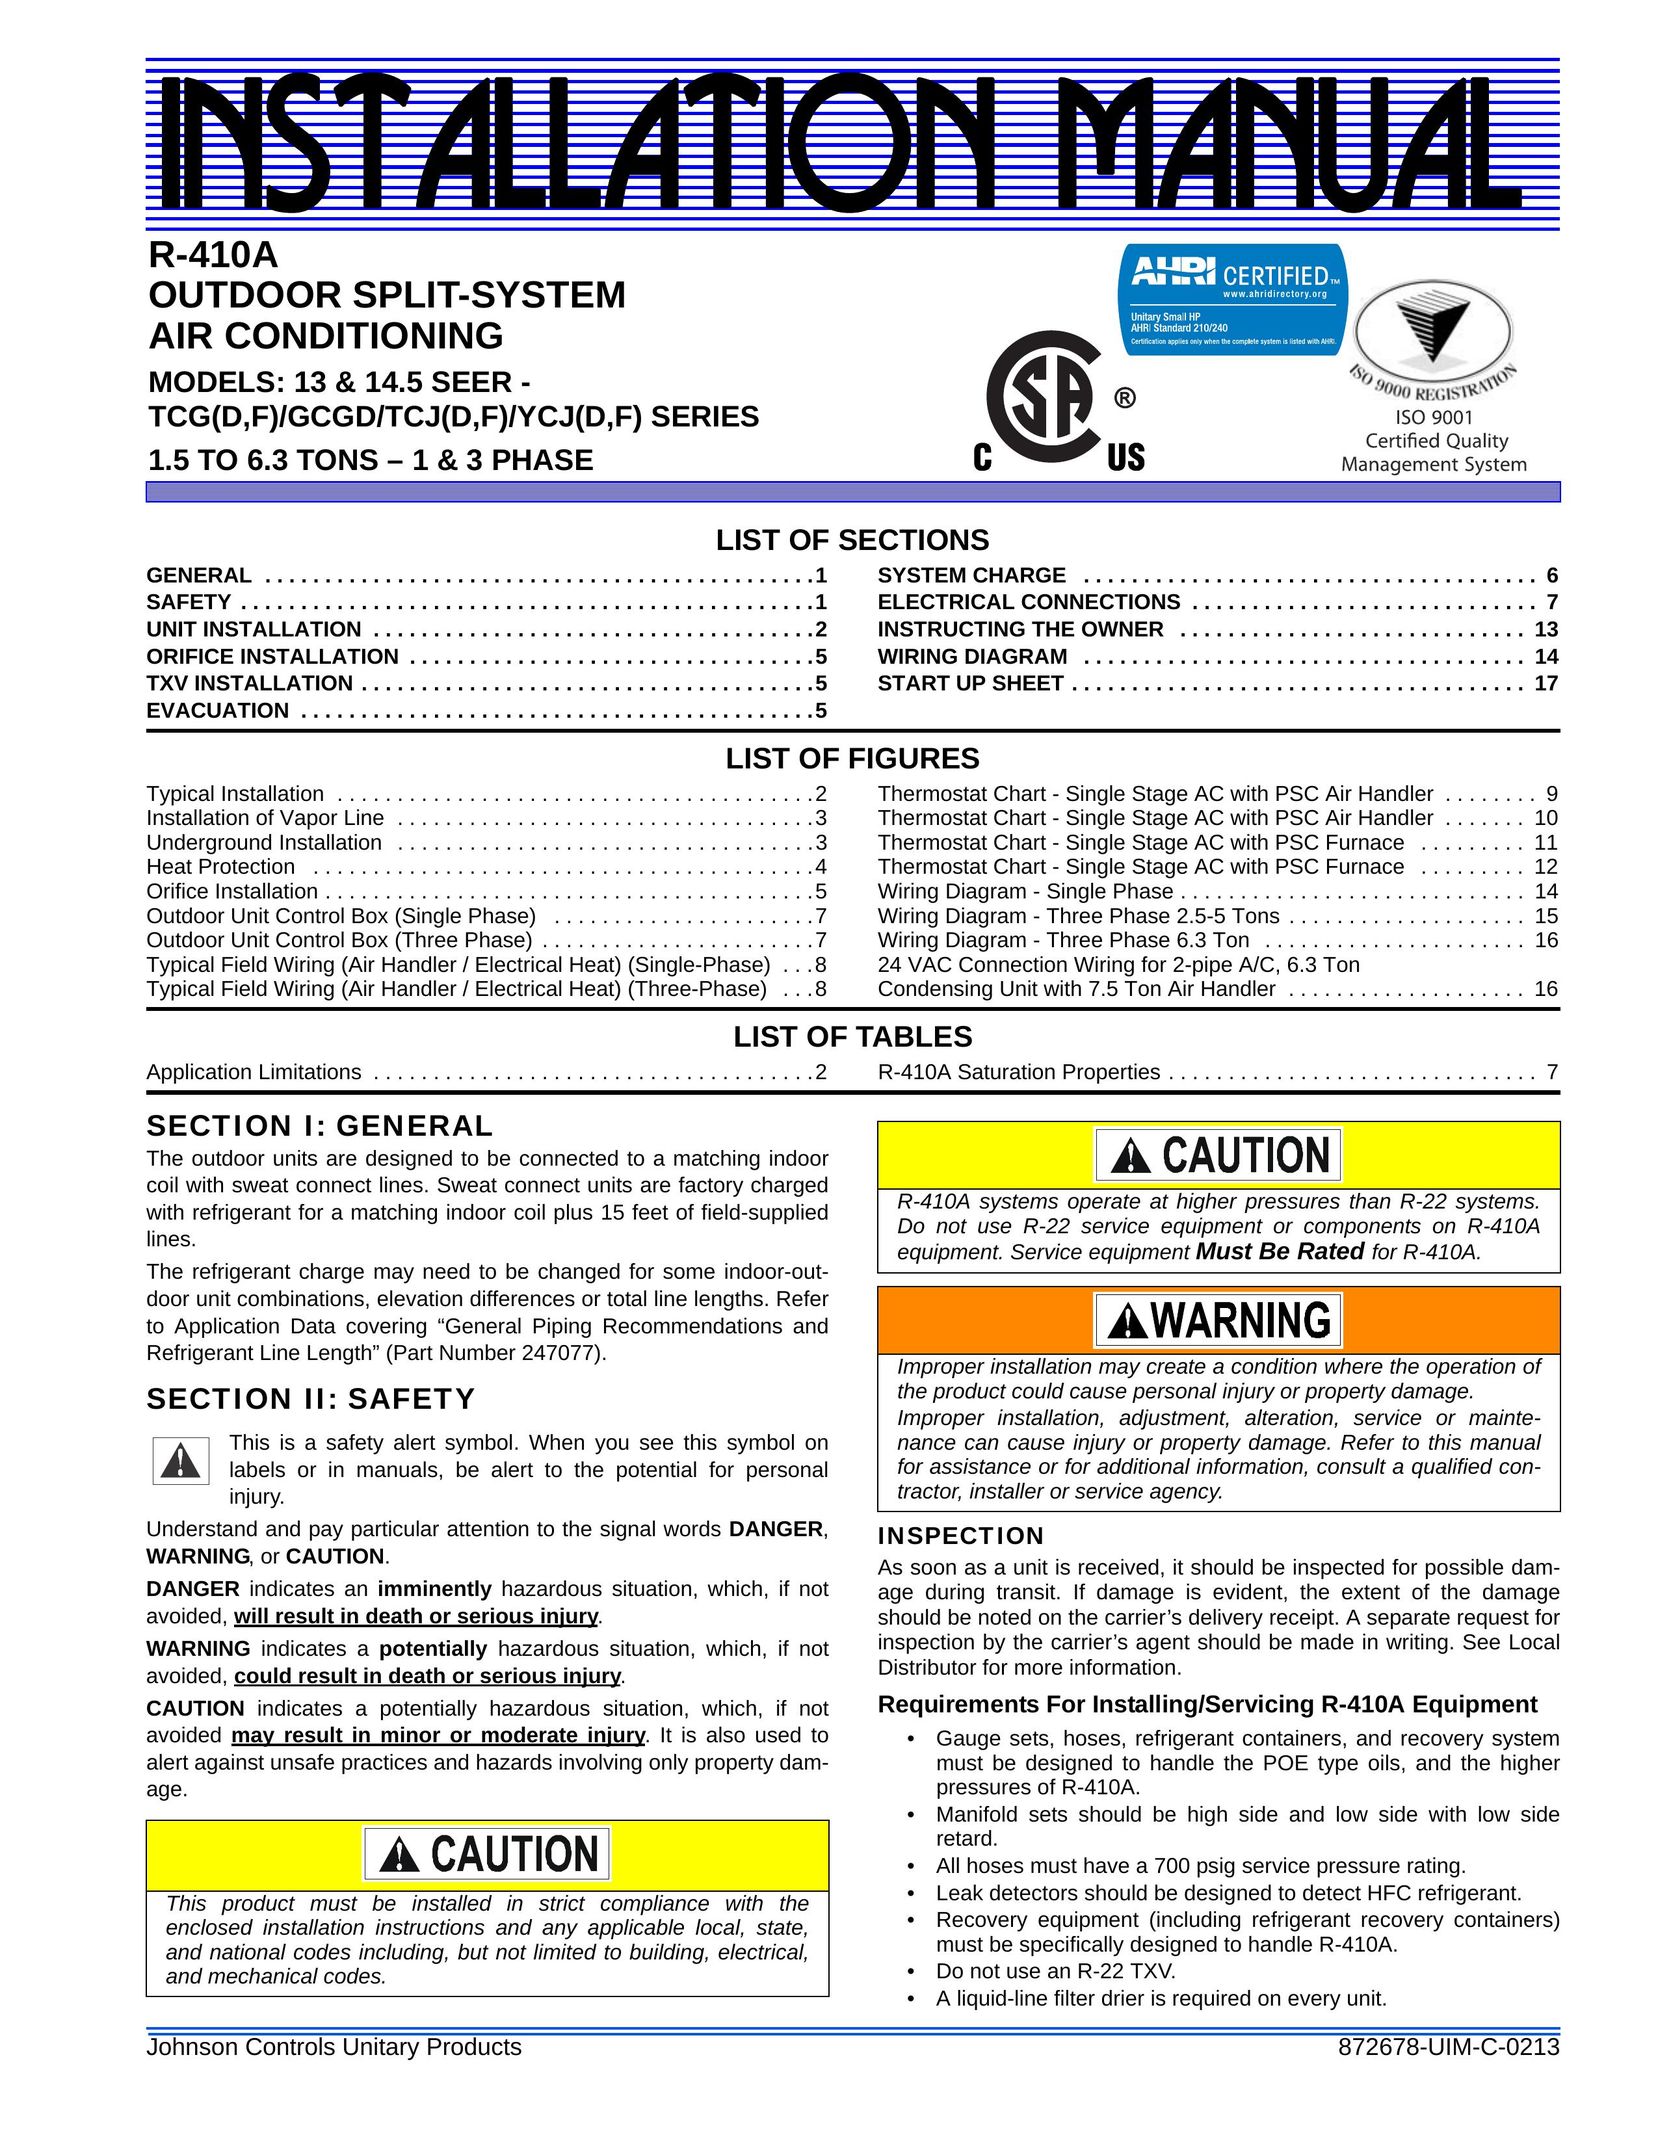 Johnson Controls F) Air Conditioner User Manual